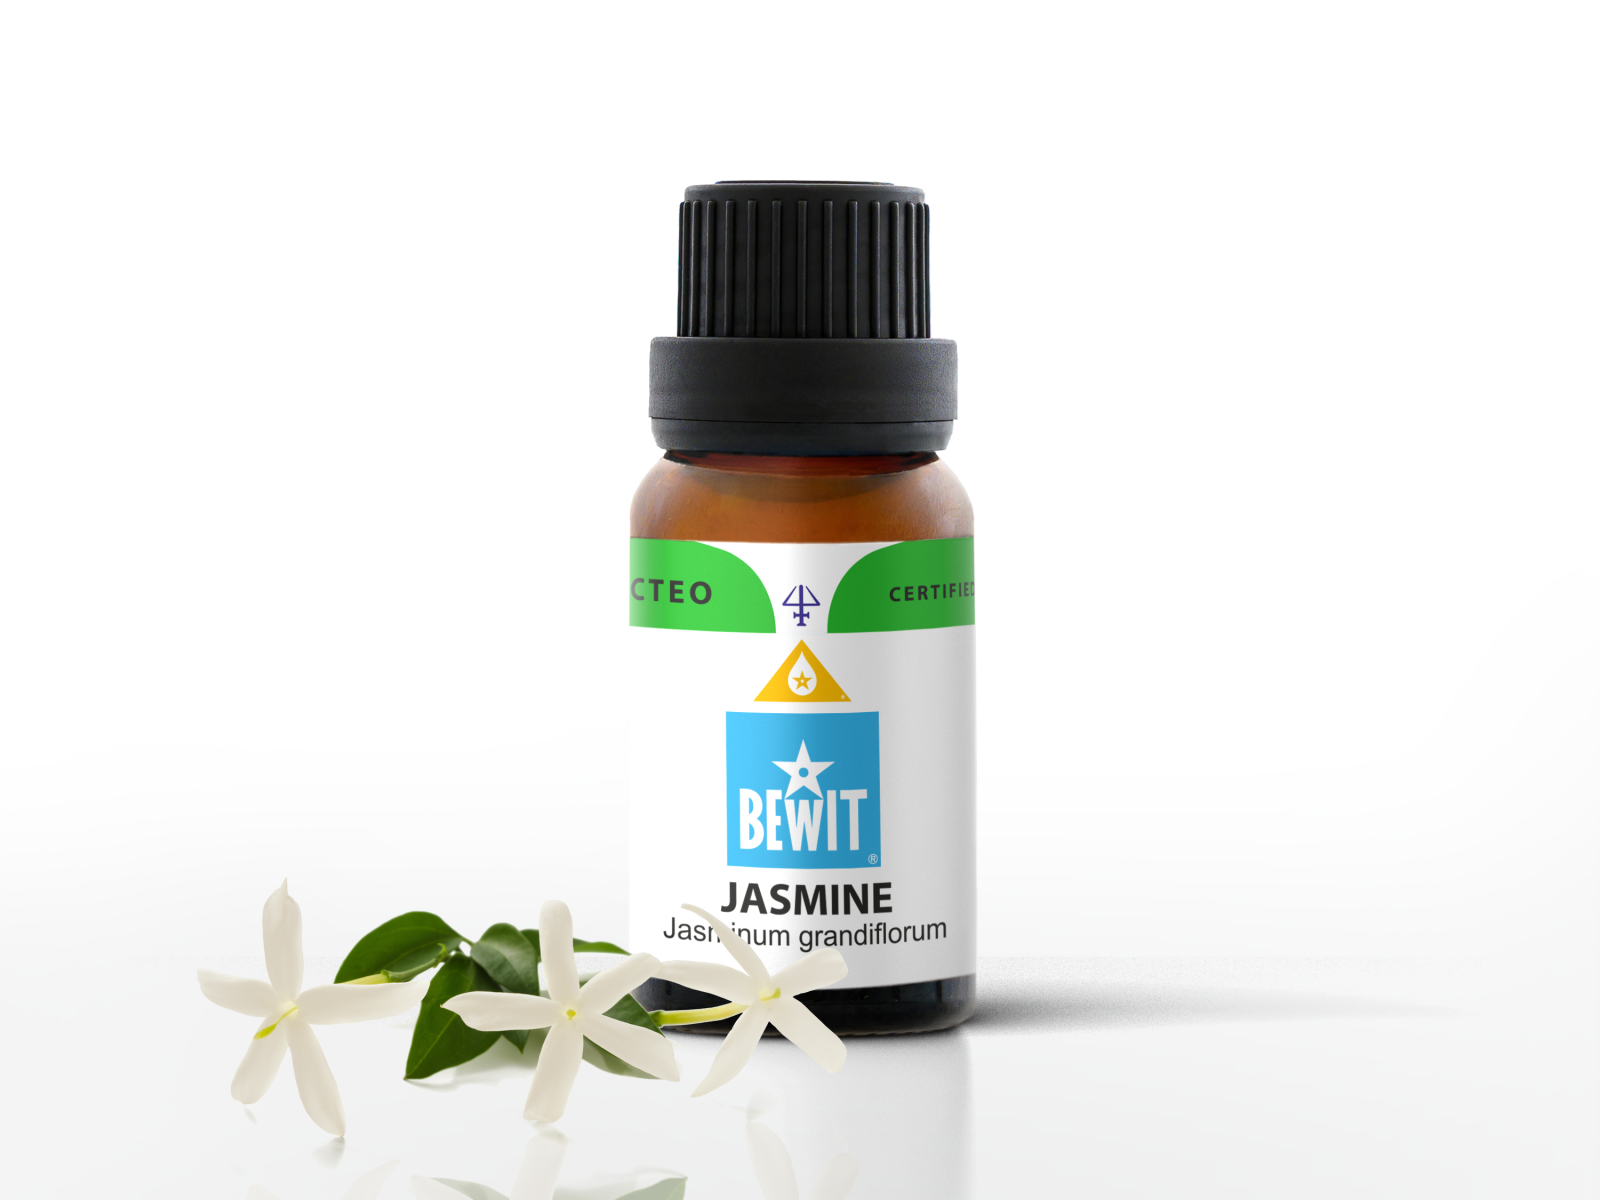 BEWIT Jasmine - absolute